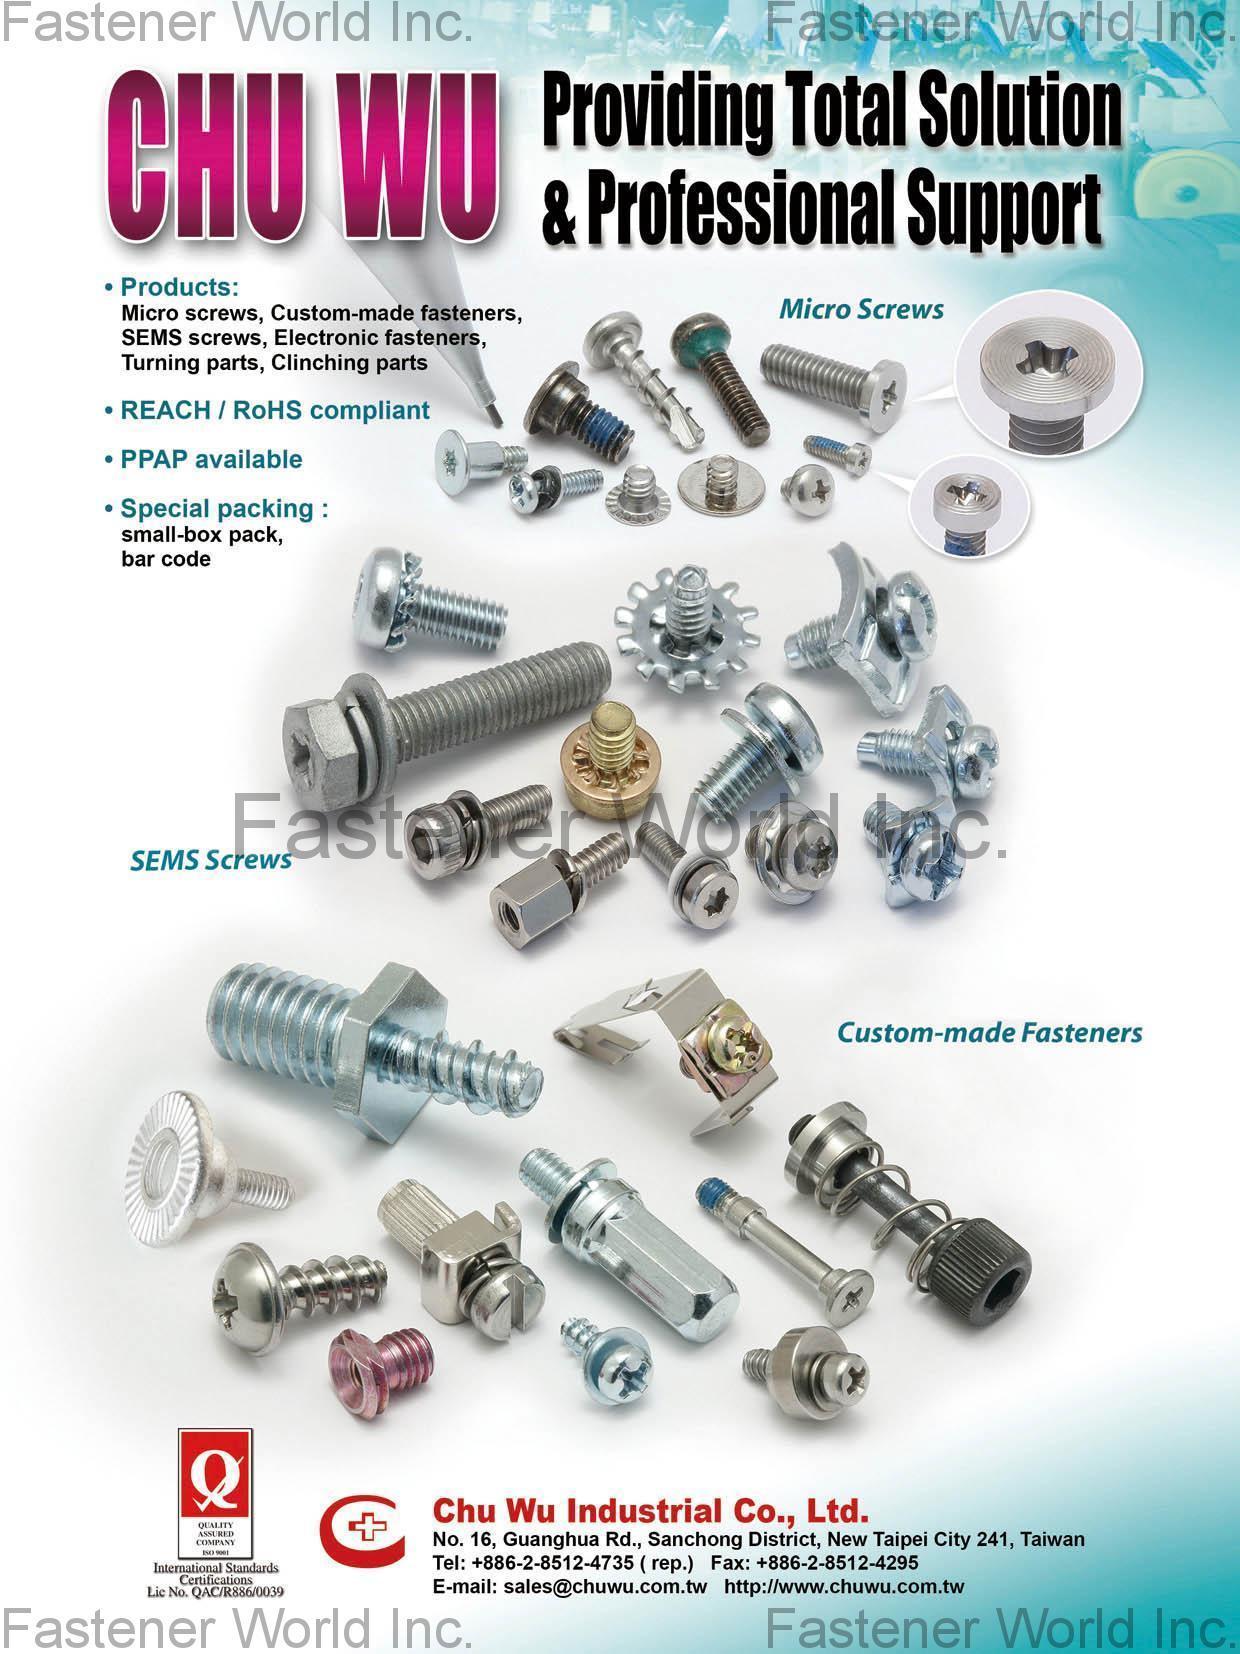 CHU WU INDUSTRIAL CO., LTD.  , Micro Screws,Custom-made Fasteners,SEMS Screws,Electronic Fasteners,Turning Parts,Clinching Parts , Miniature Precision Screws